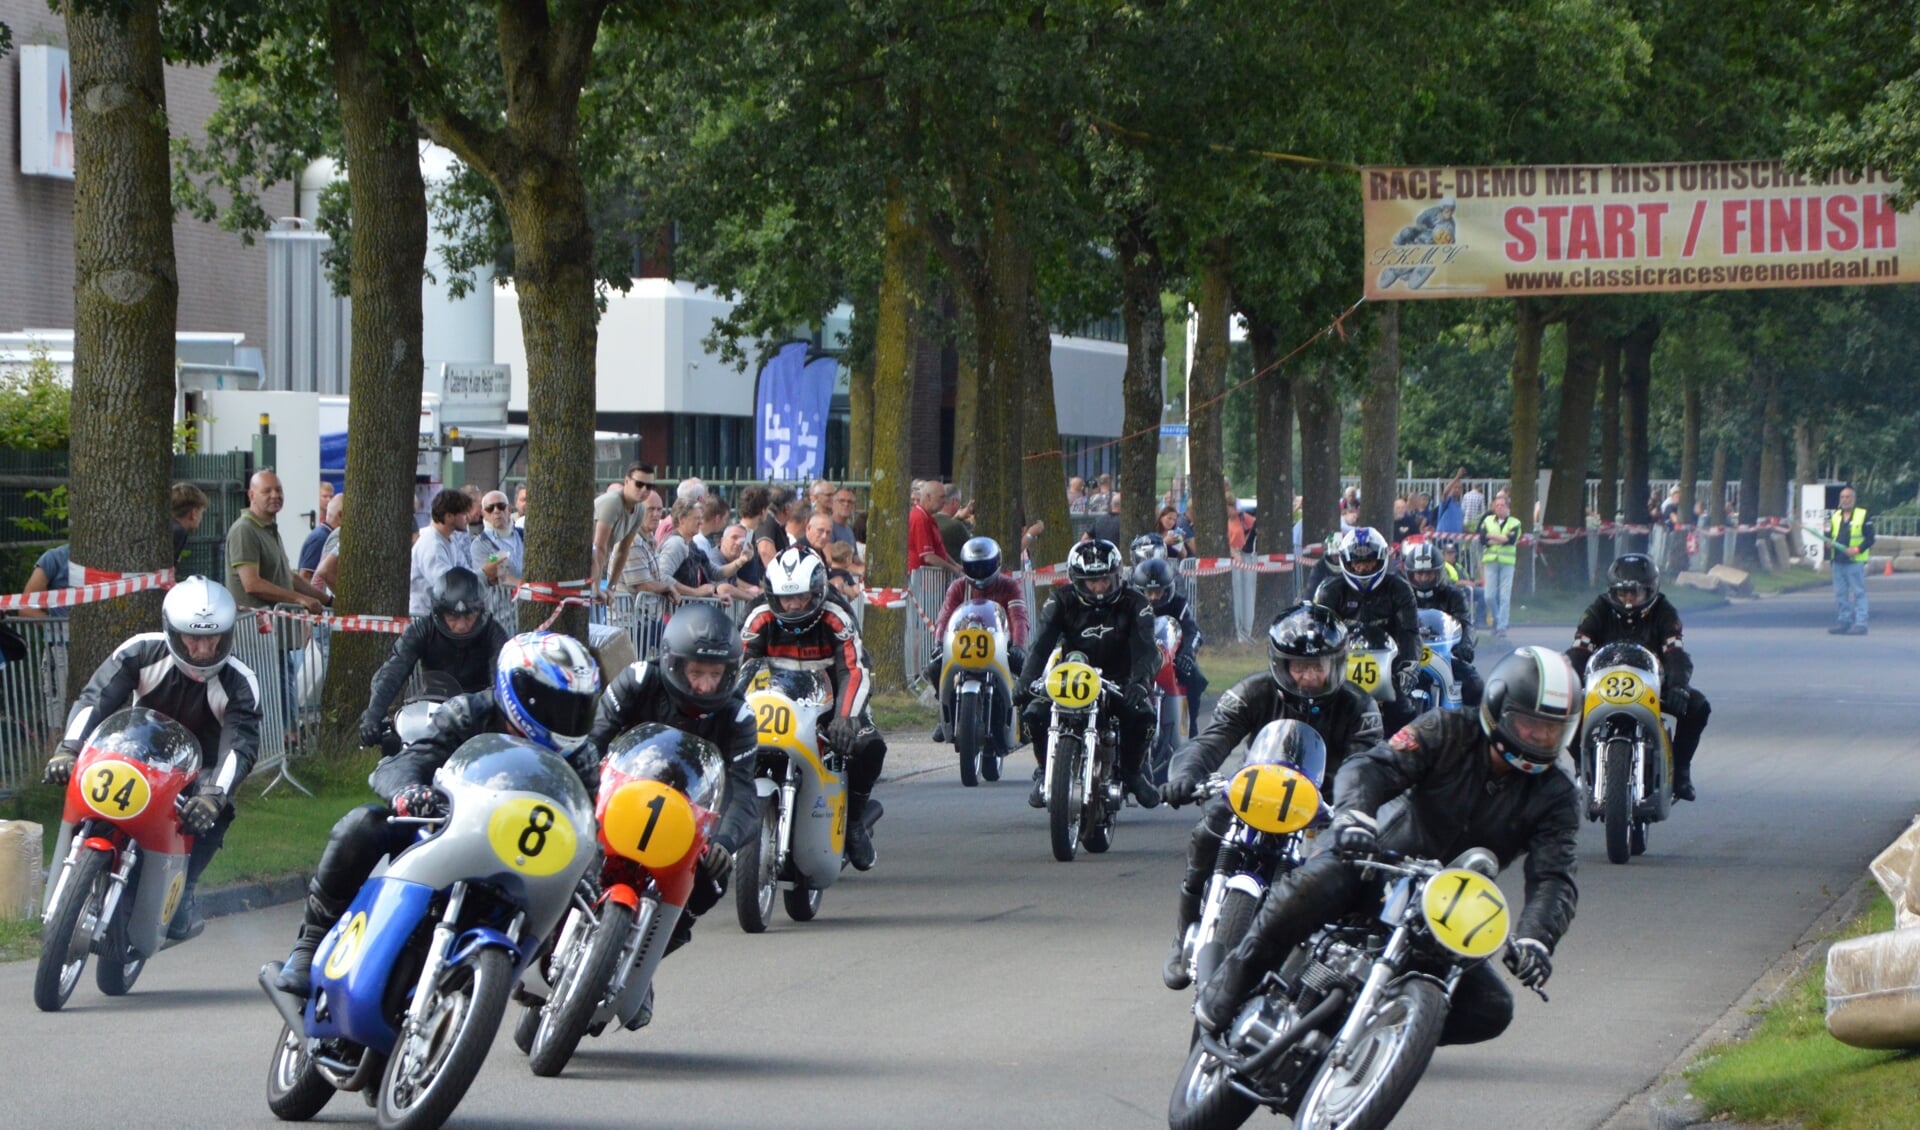 27e Classic Races Veenendaal